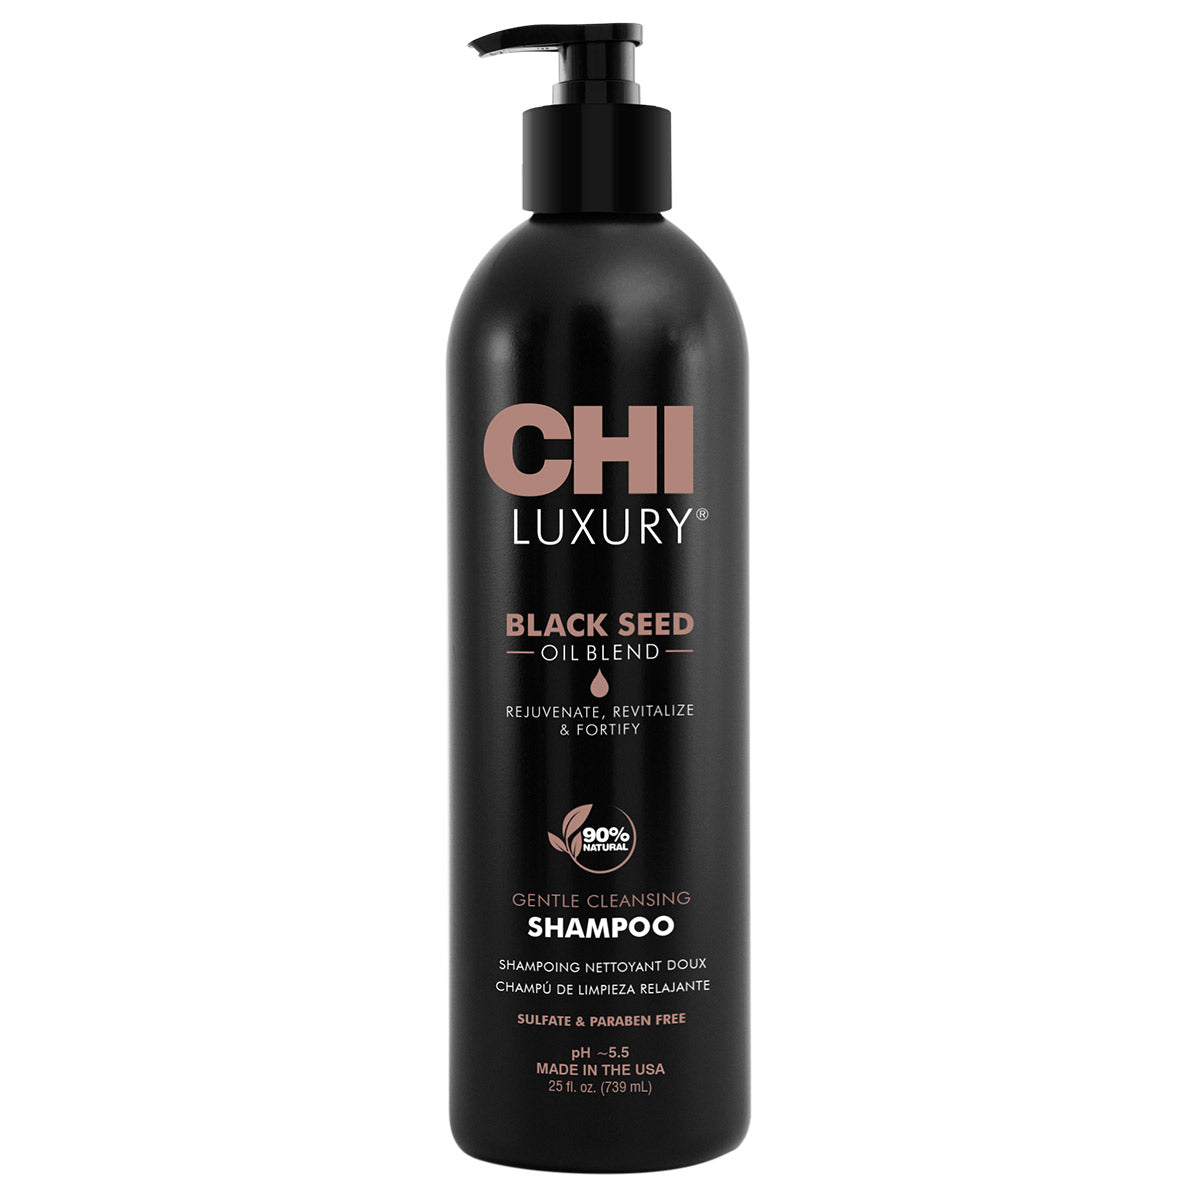 CHI Luxury Black Seed Oil Blend Gentle Cleansing Shampoo, 12oz